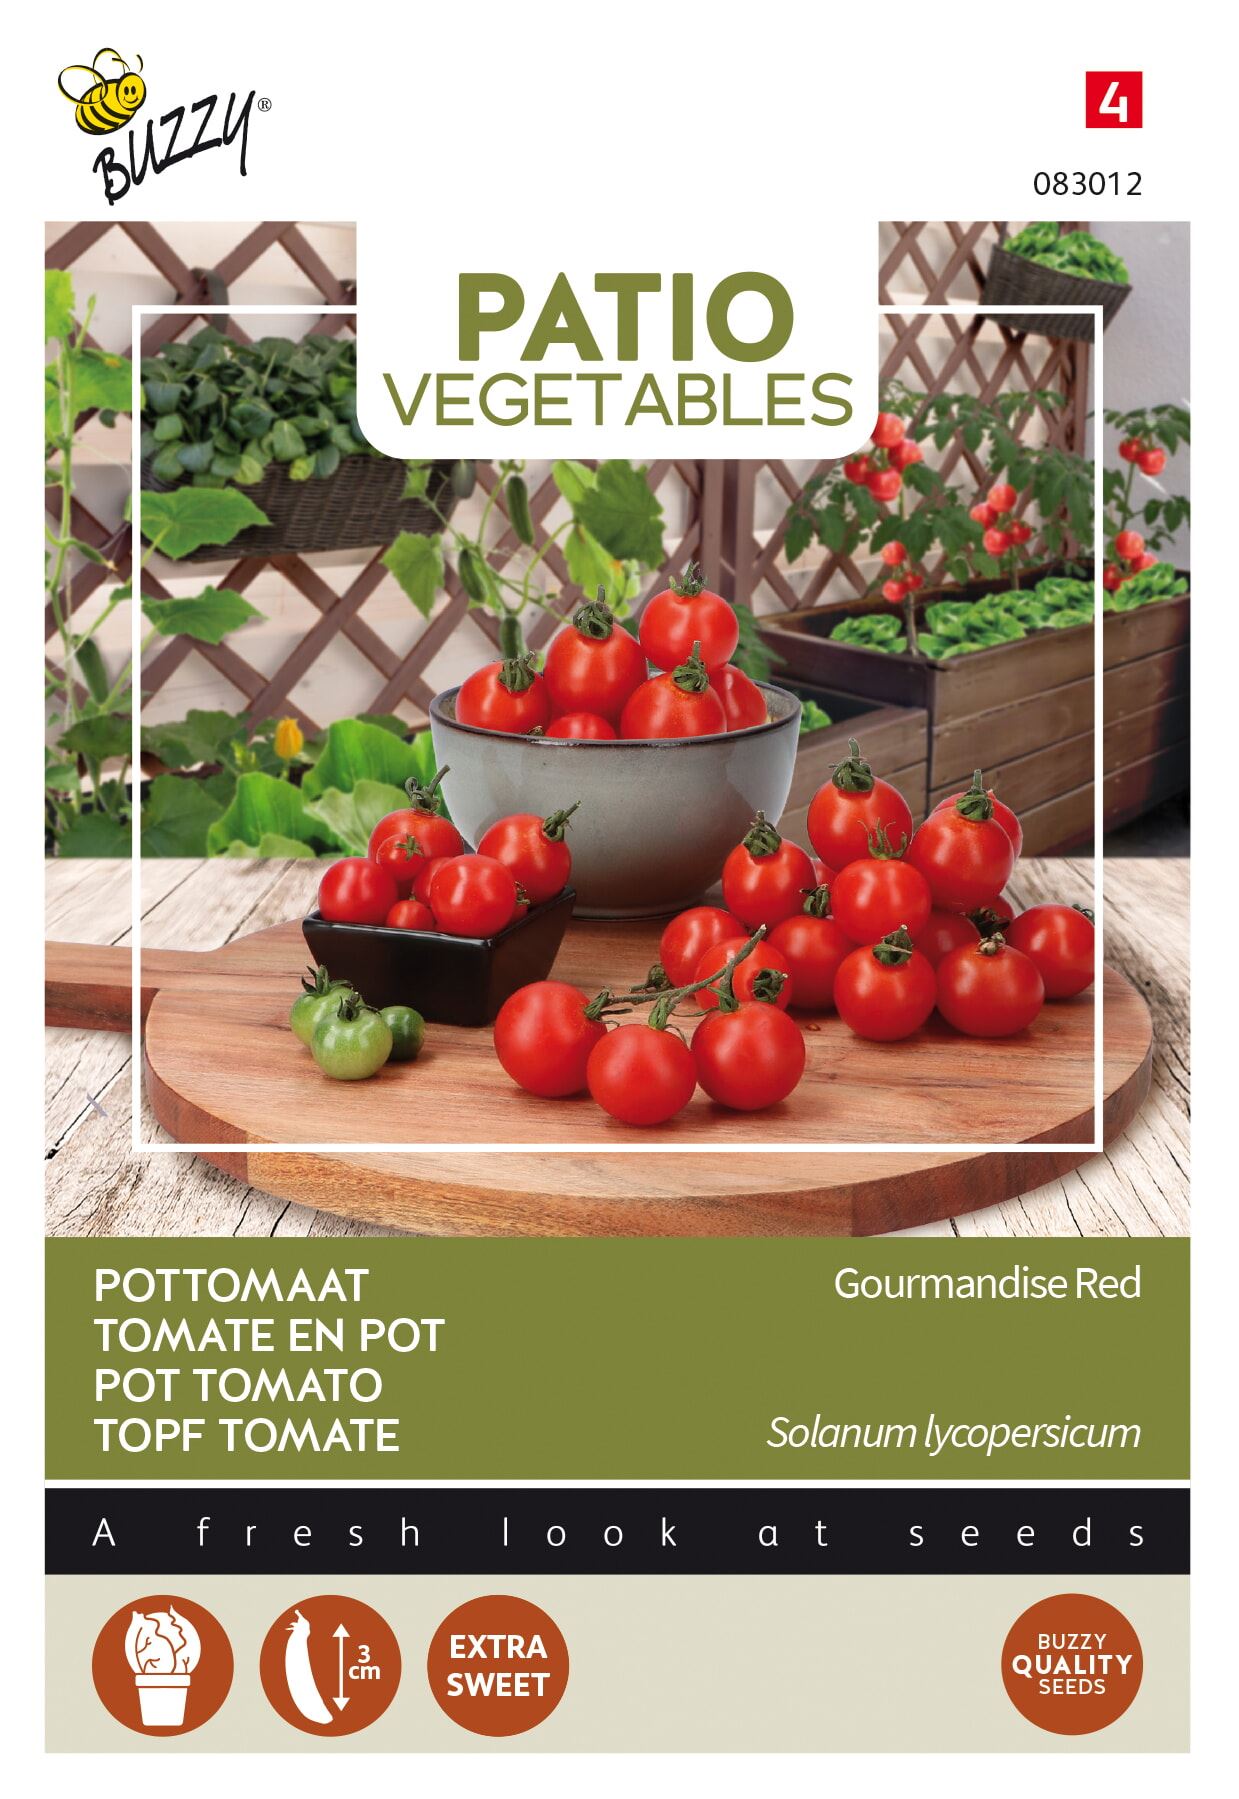 Buzzy-Patio-Veggies-Tomaat-Gourmandise-Red